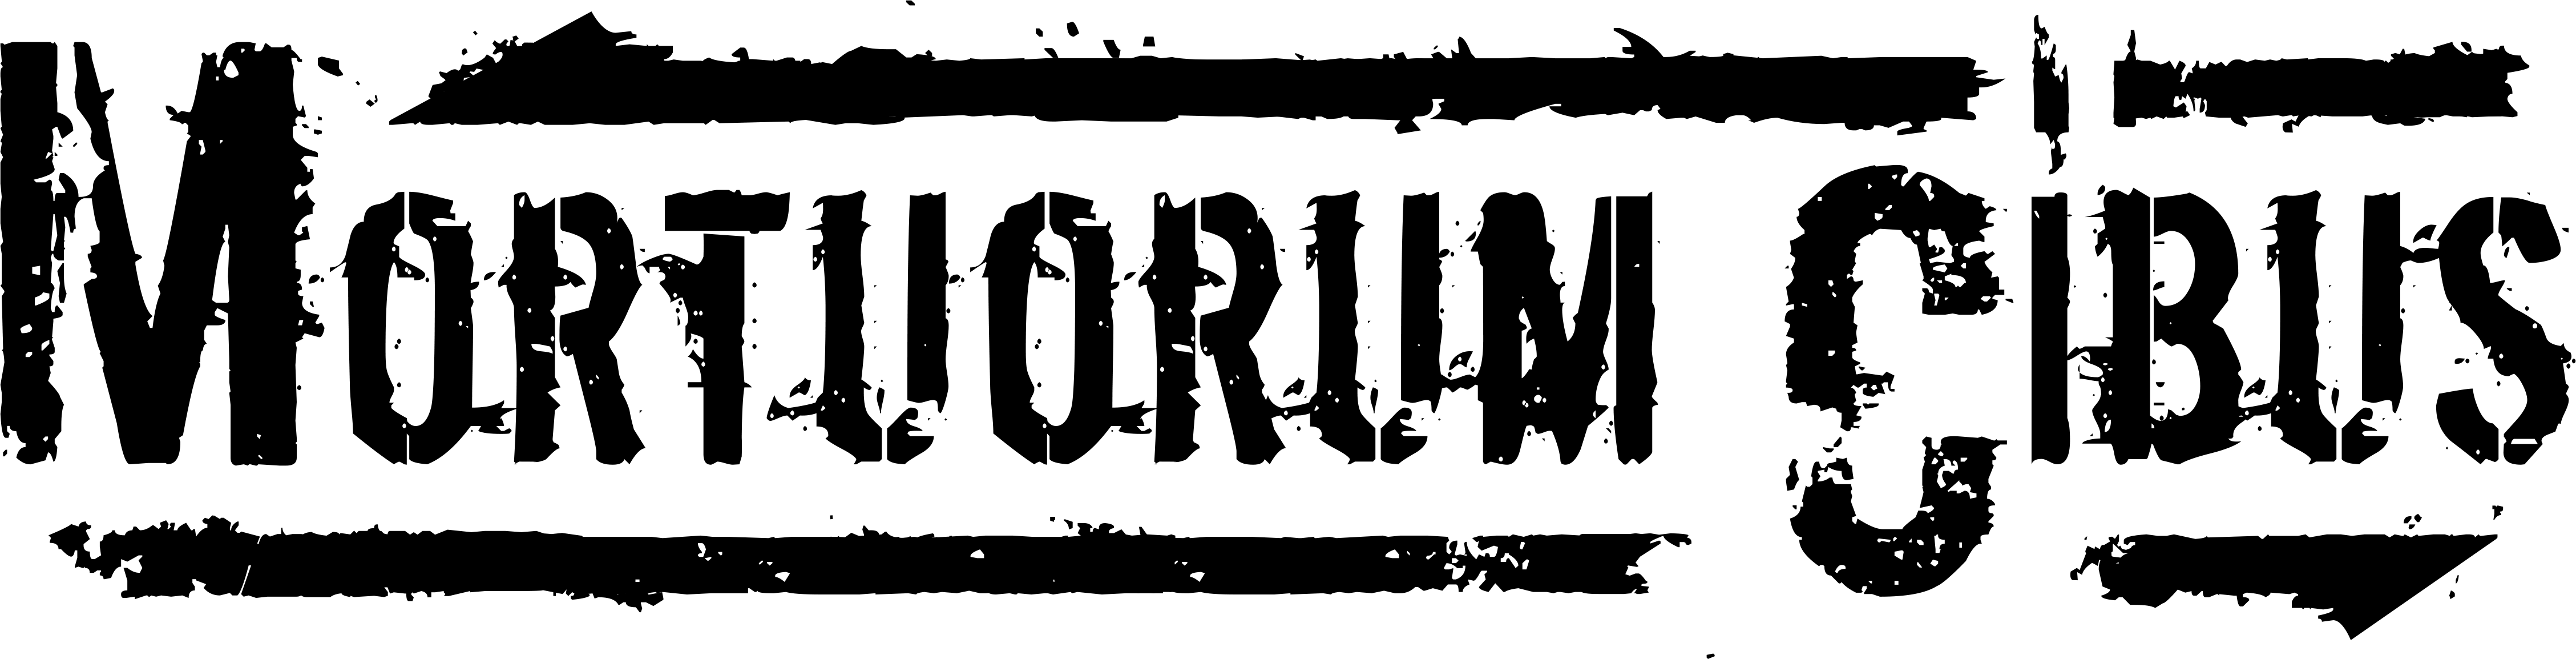 Mortuorum Cibus Logo schwarz